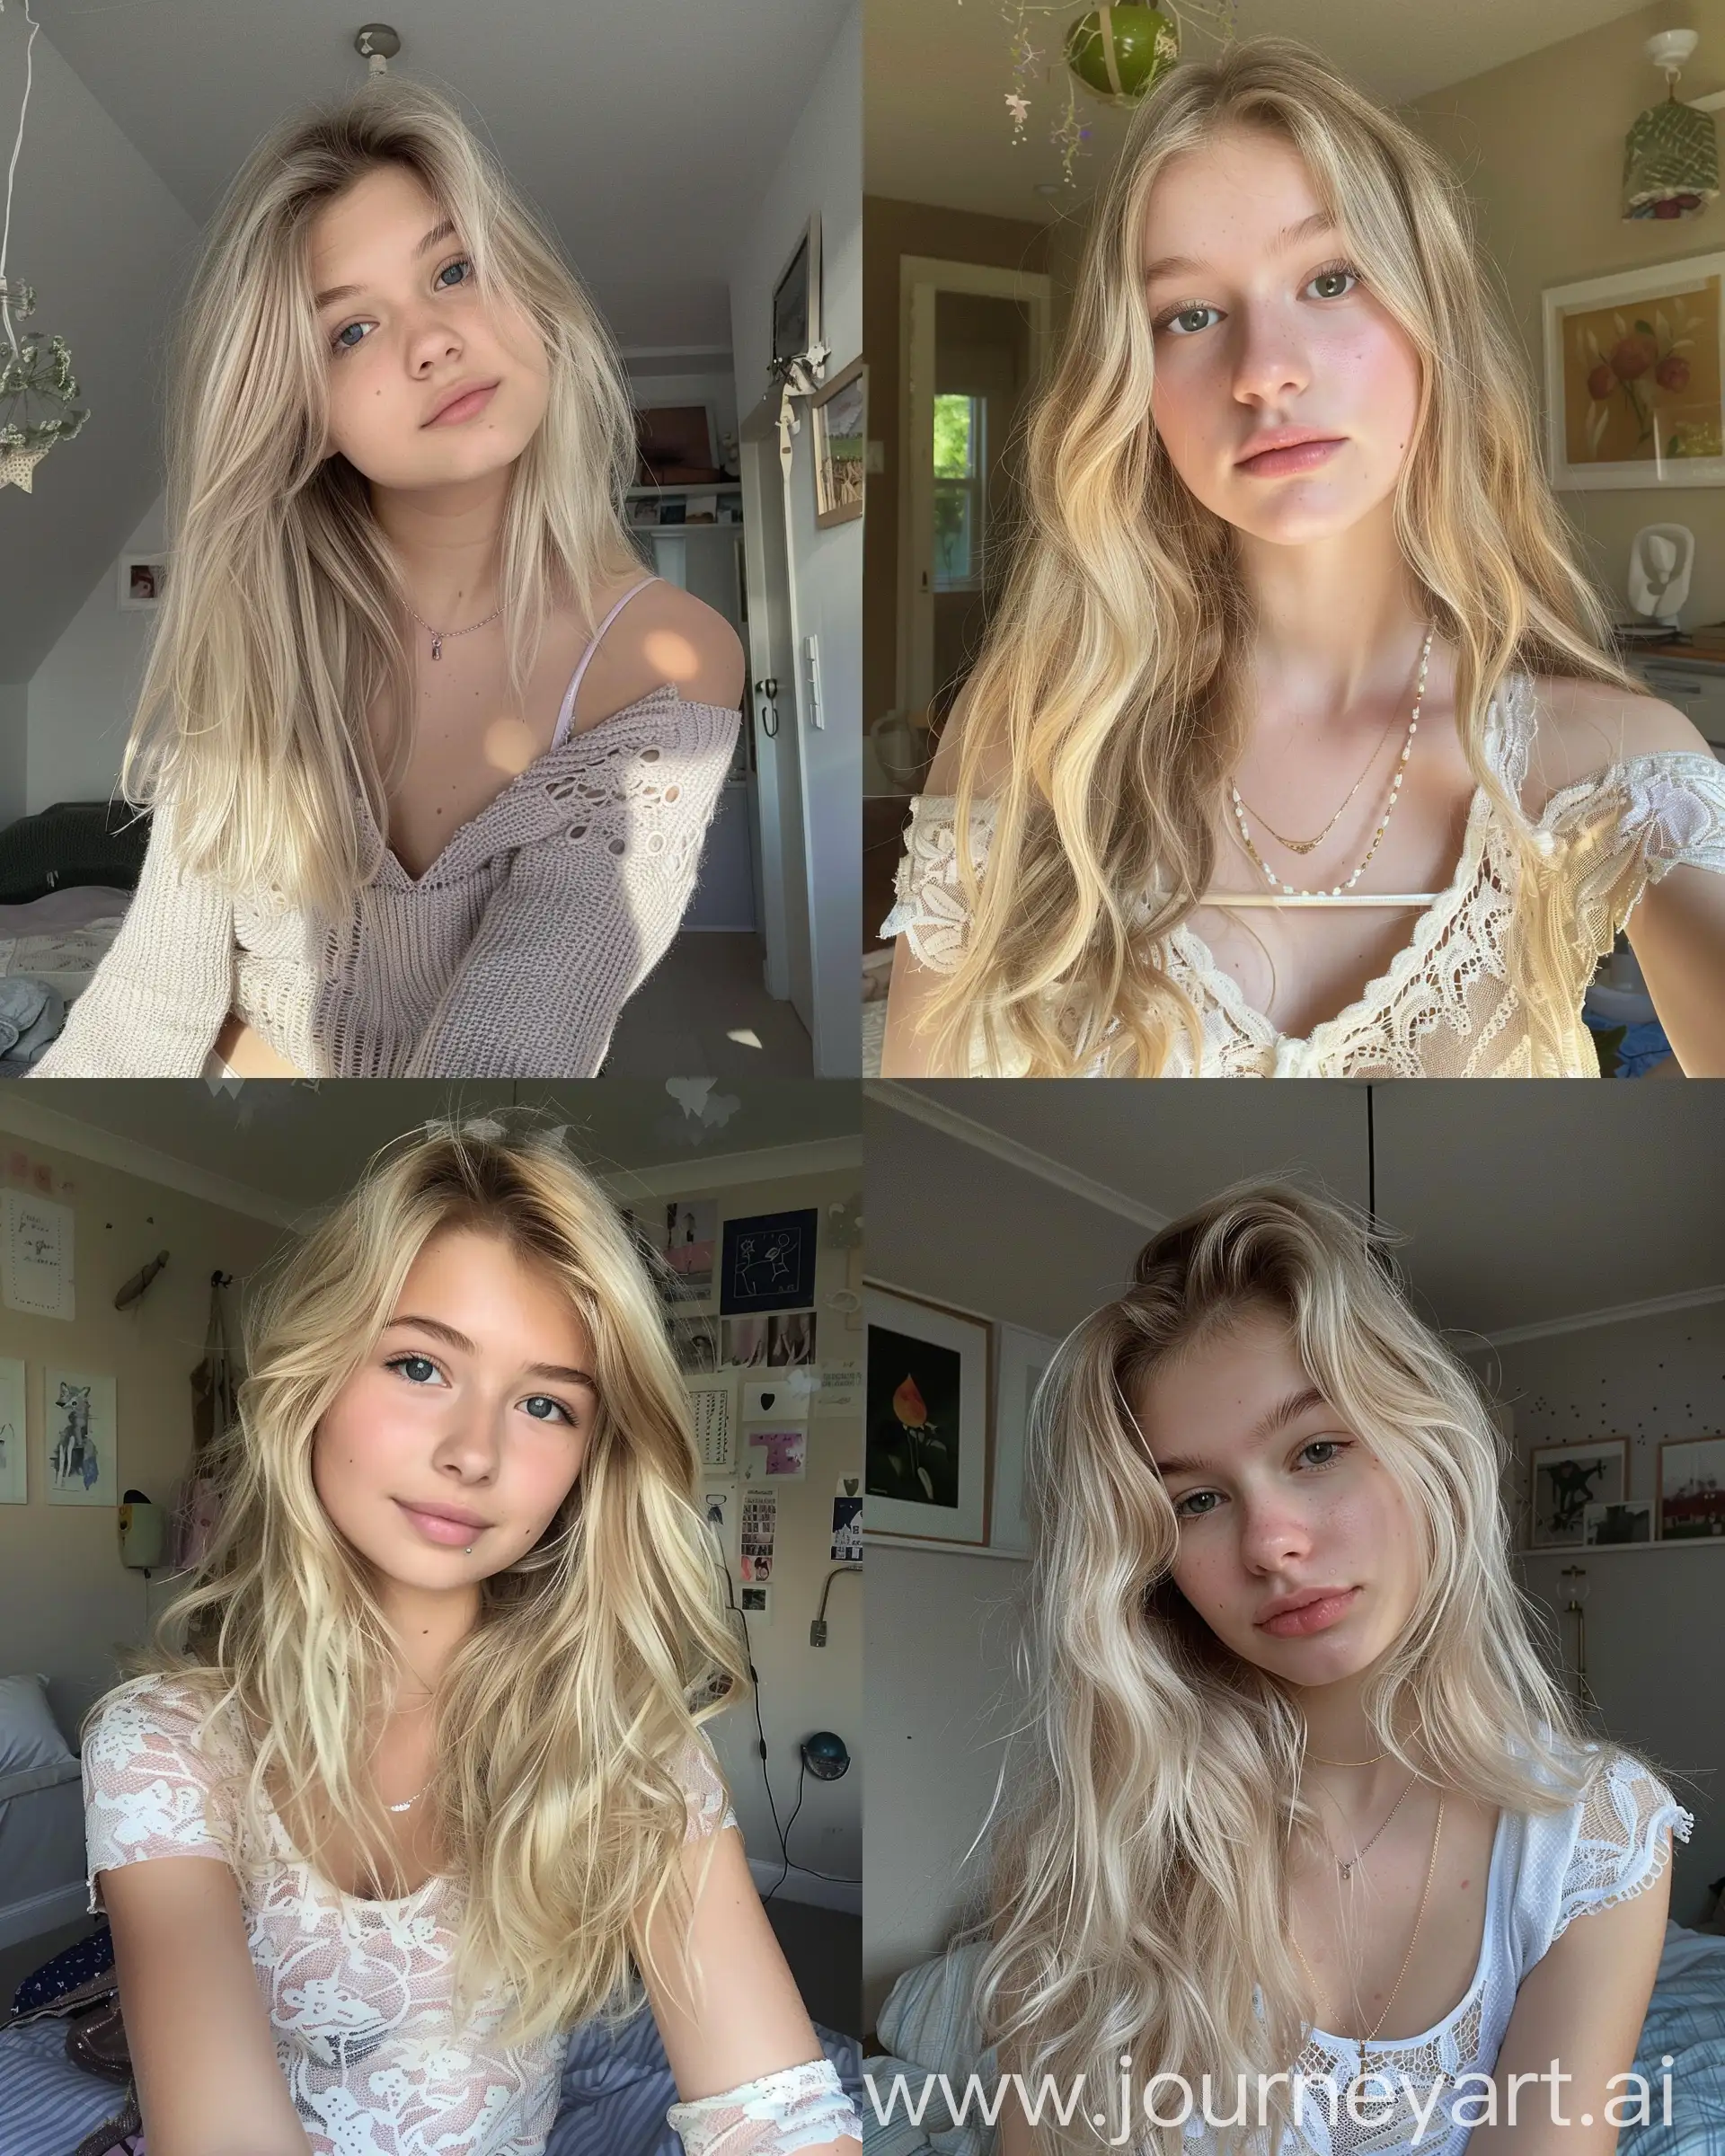 Blonde-Influencer-Captures-Bedroom-Selfie-in-Lacy-Atmosphere